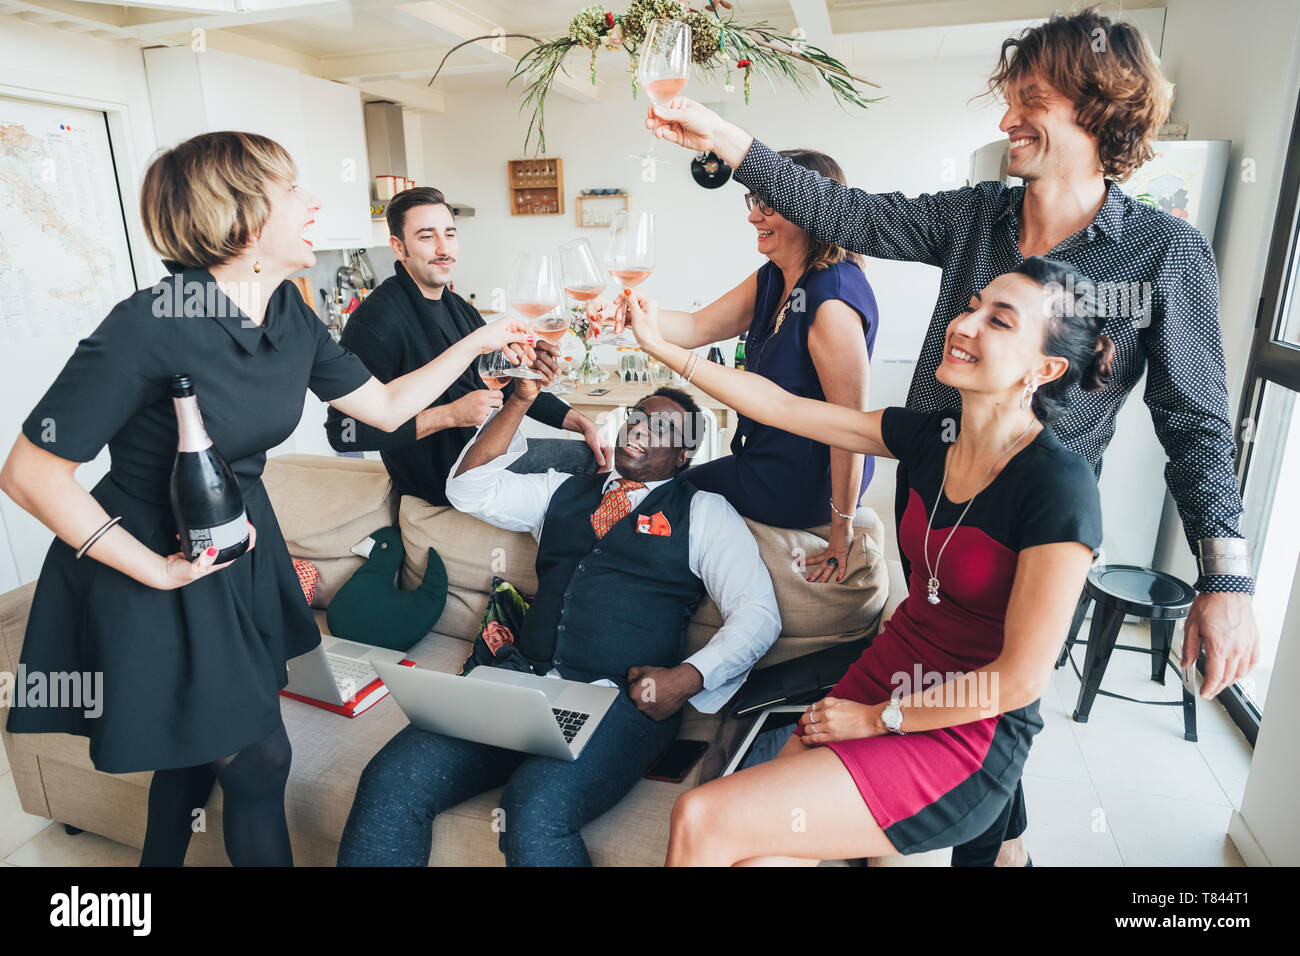 Businessmen and businesswomen toasting wine in loft office Stock Photo